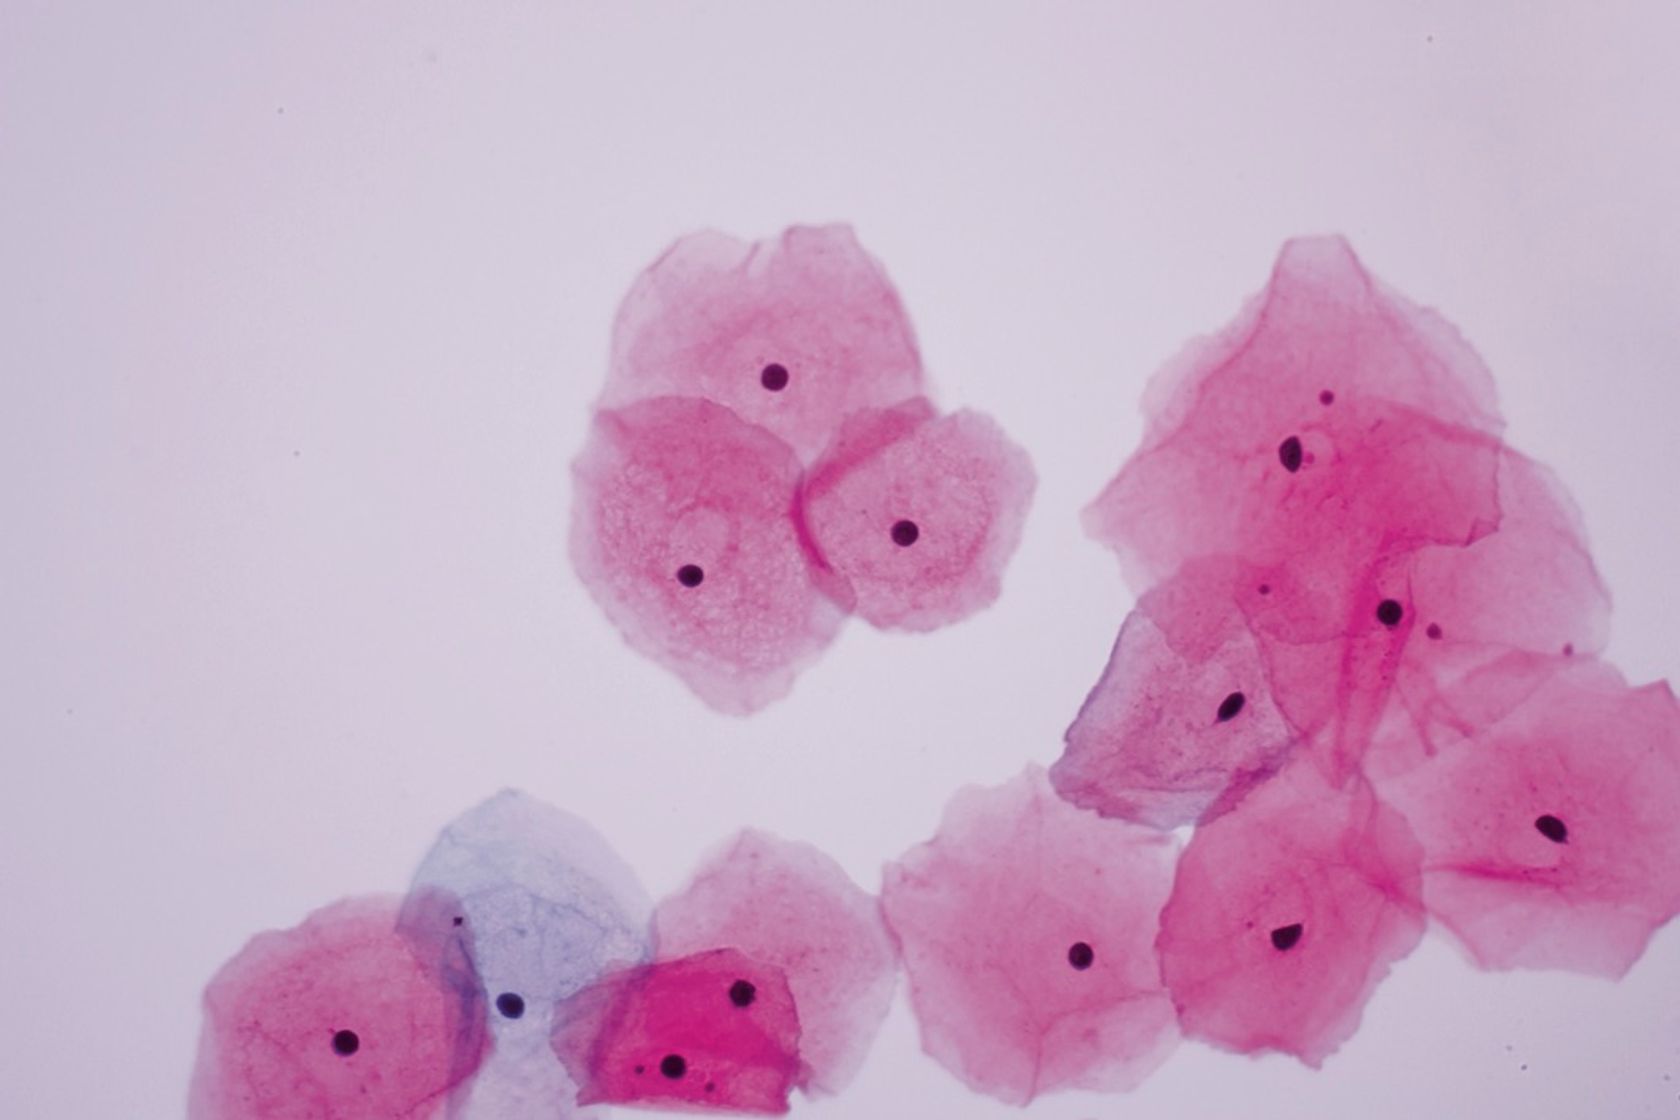 Zervixzellen unterm Mikroskop